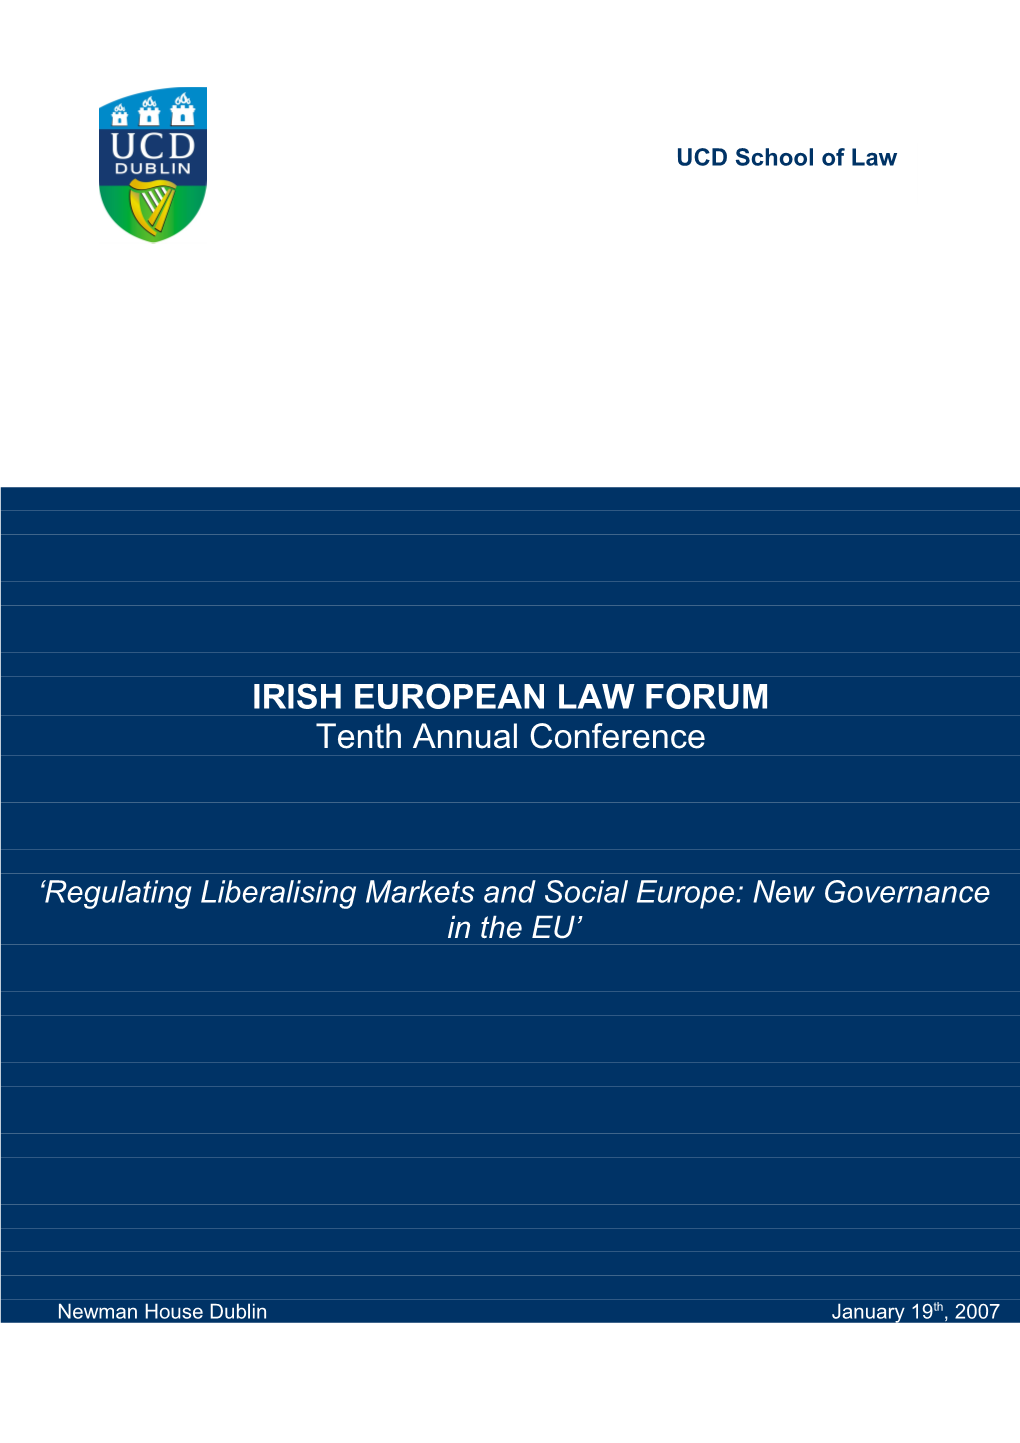 Irish European Law Forum